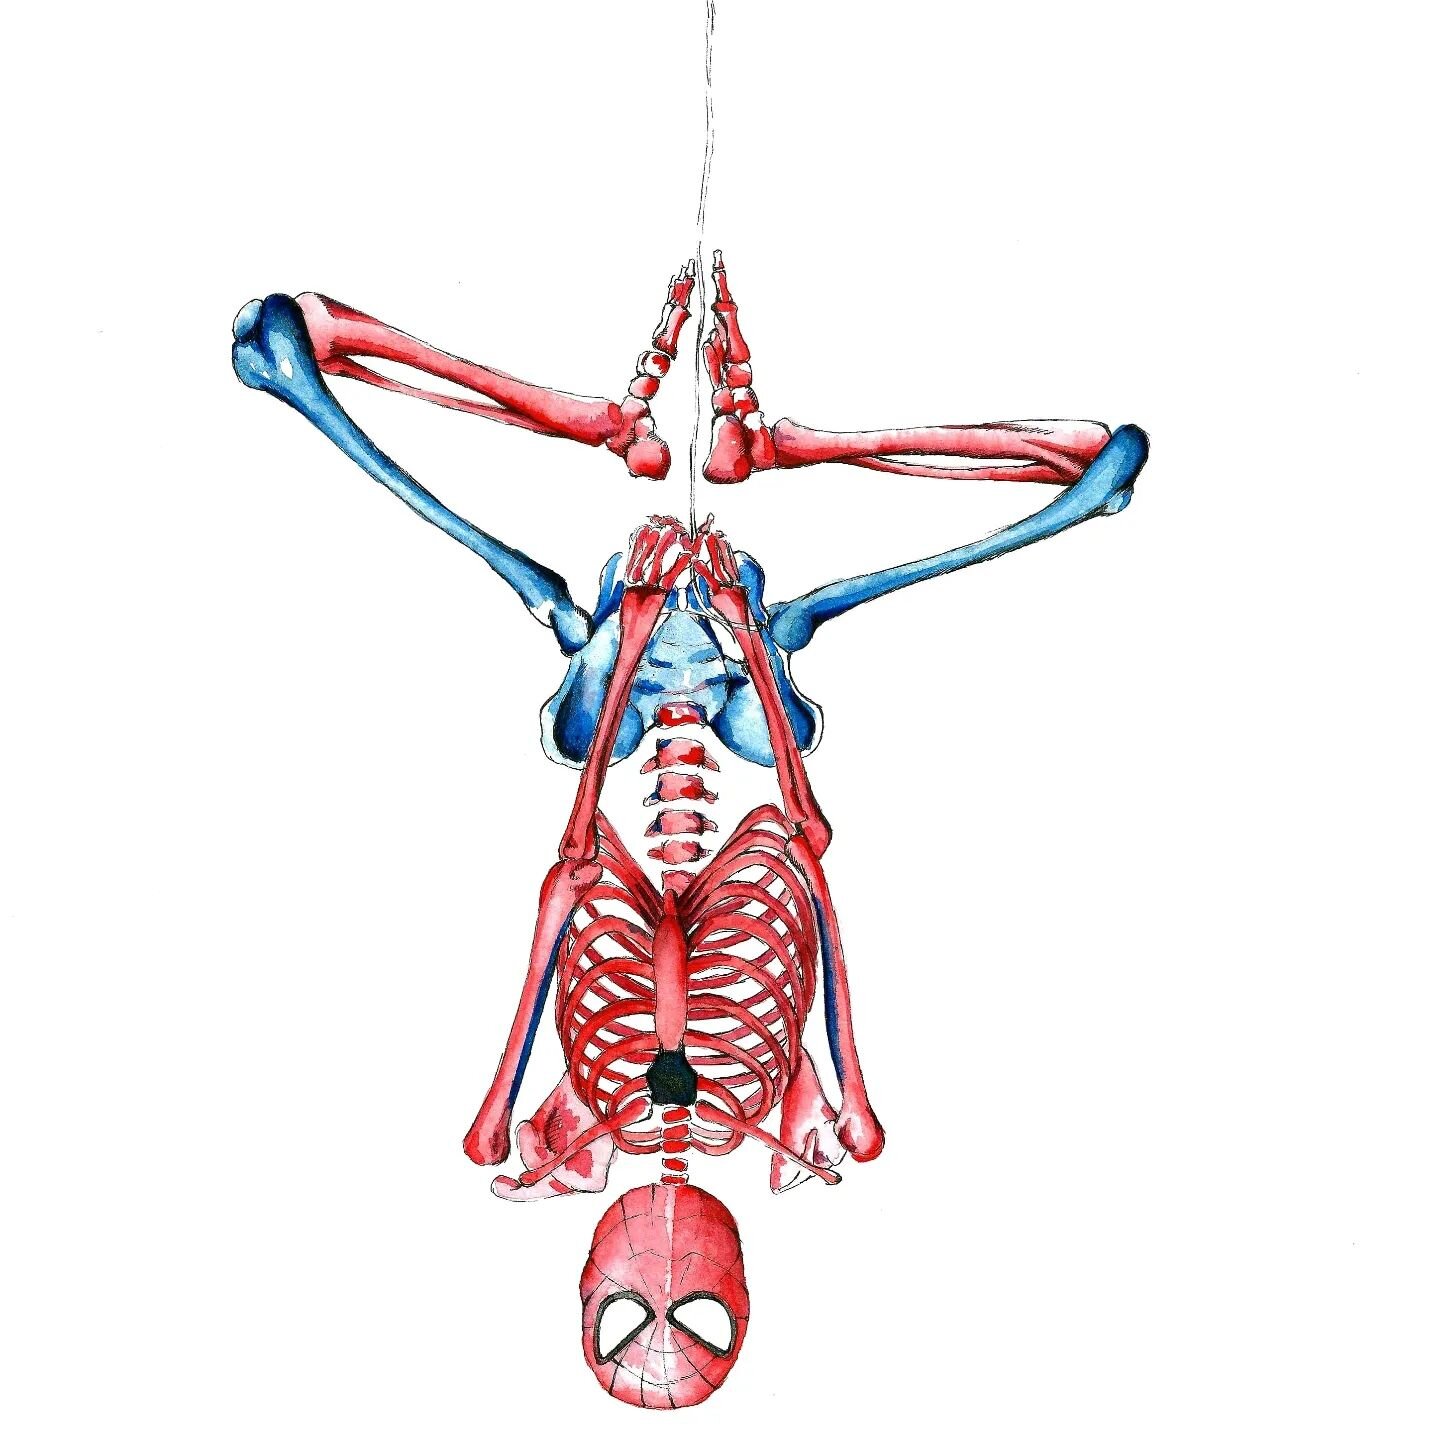 Hanging out before nightshift.
.
.
.
#spiderman #anatomyart #anatomy #medicine #doctor #medical #medicalschool #anatomicaldrawing #almostanatomical #study #medicalillustration #watercolour